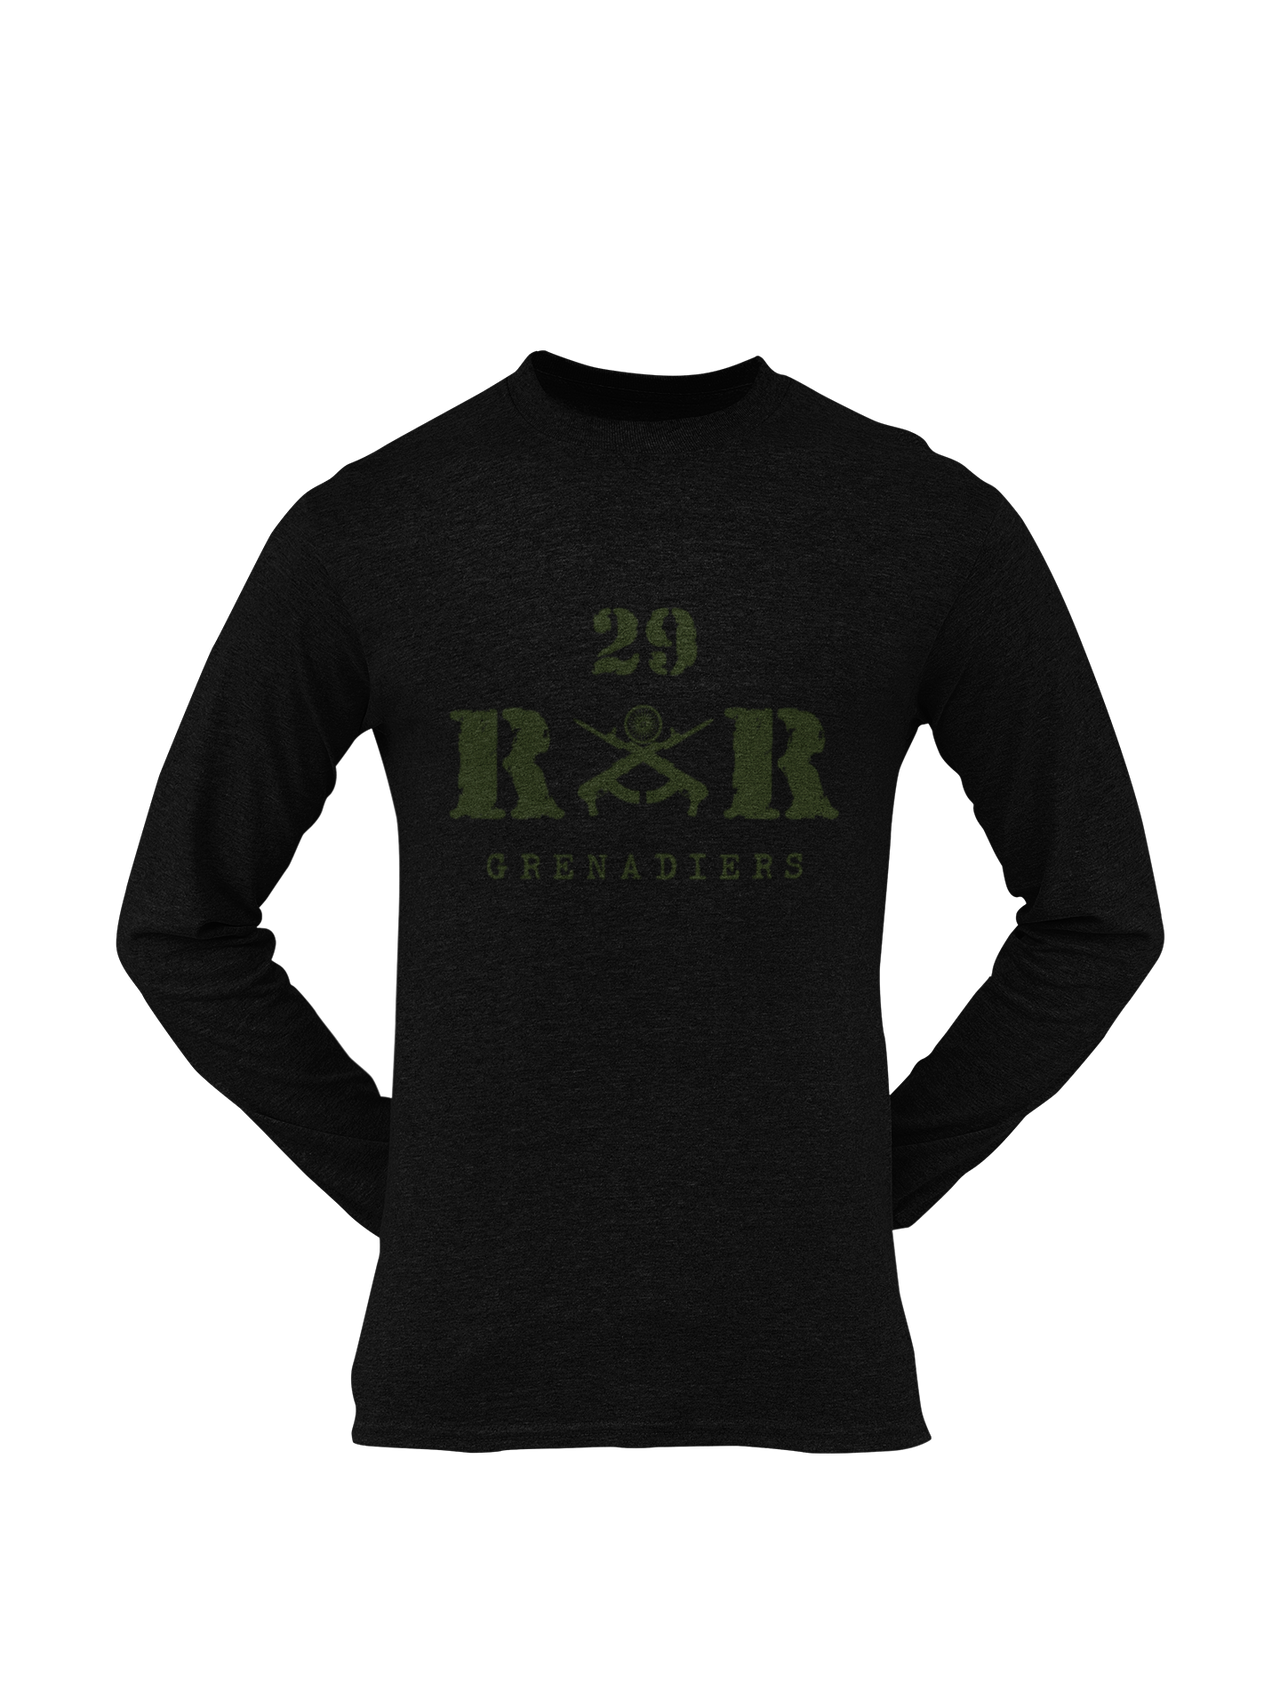 Rashtriya Rifles T-shirt - 29 RR Grenadiers (Men)